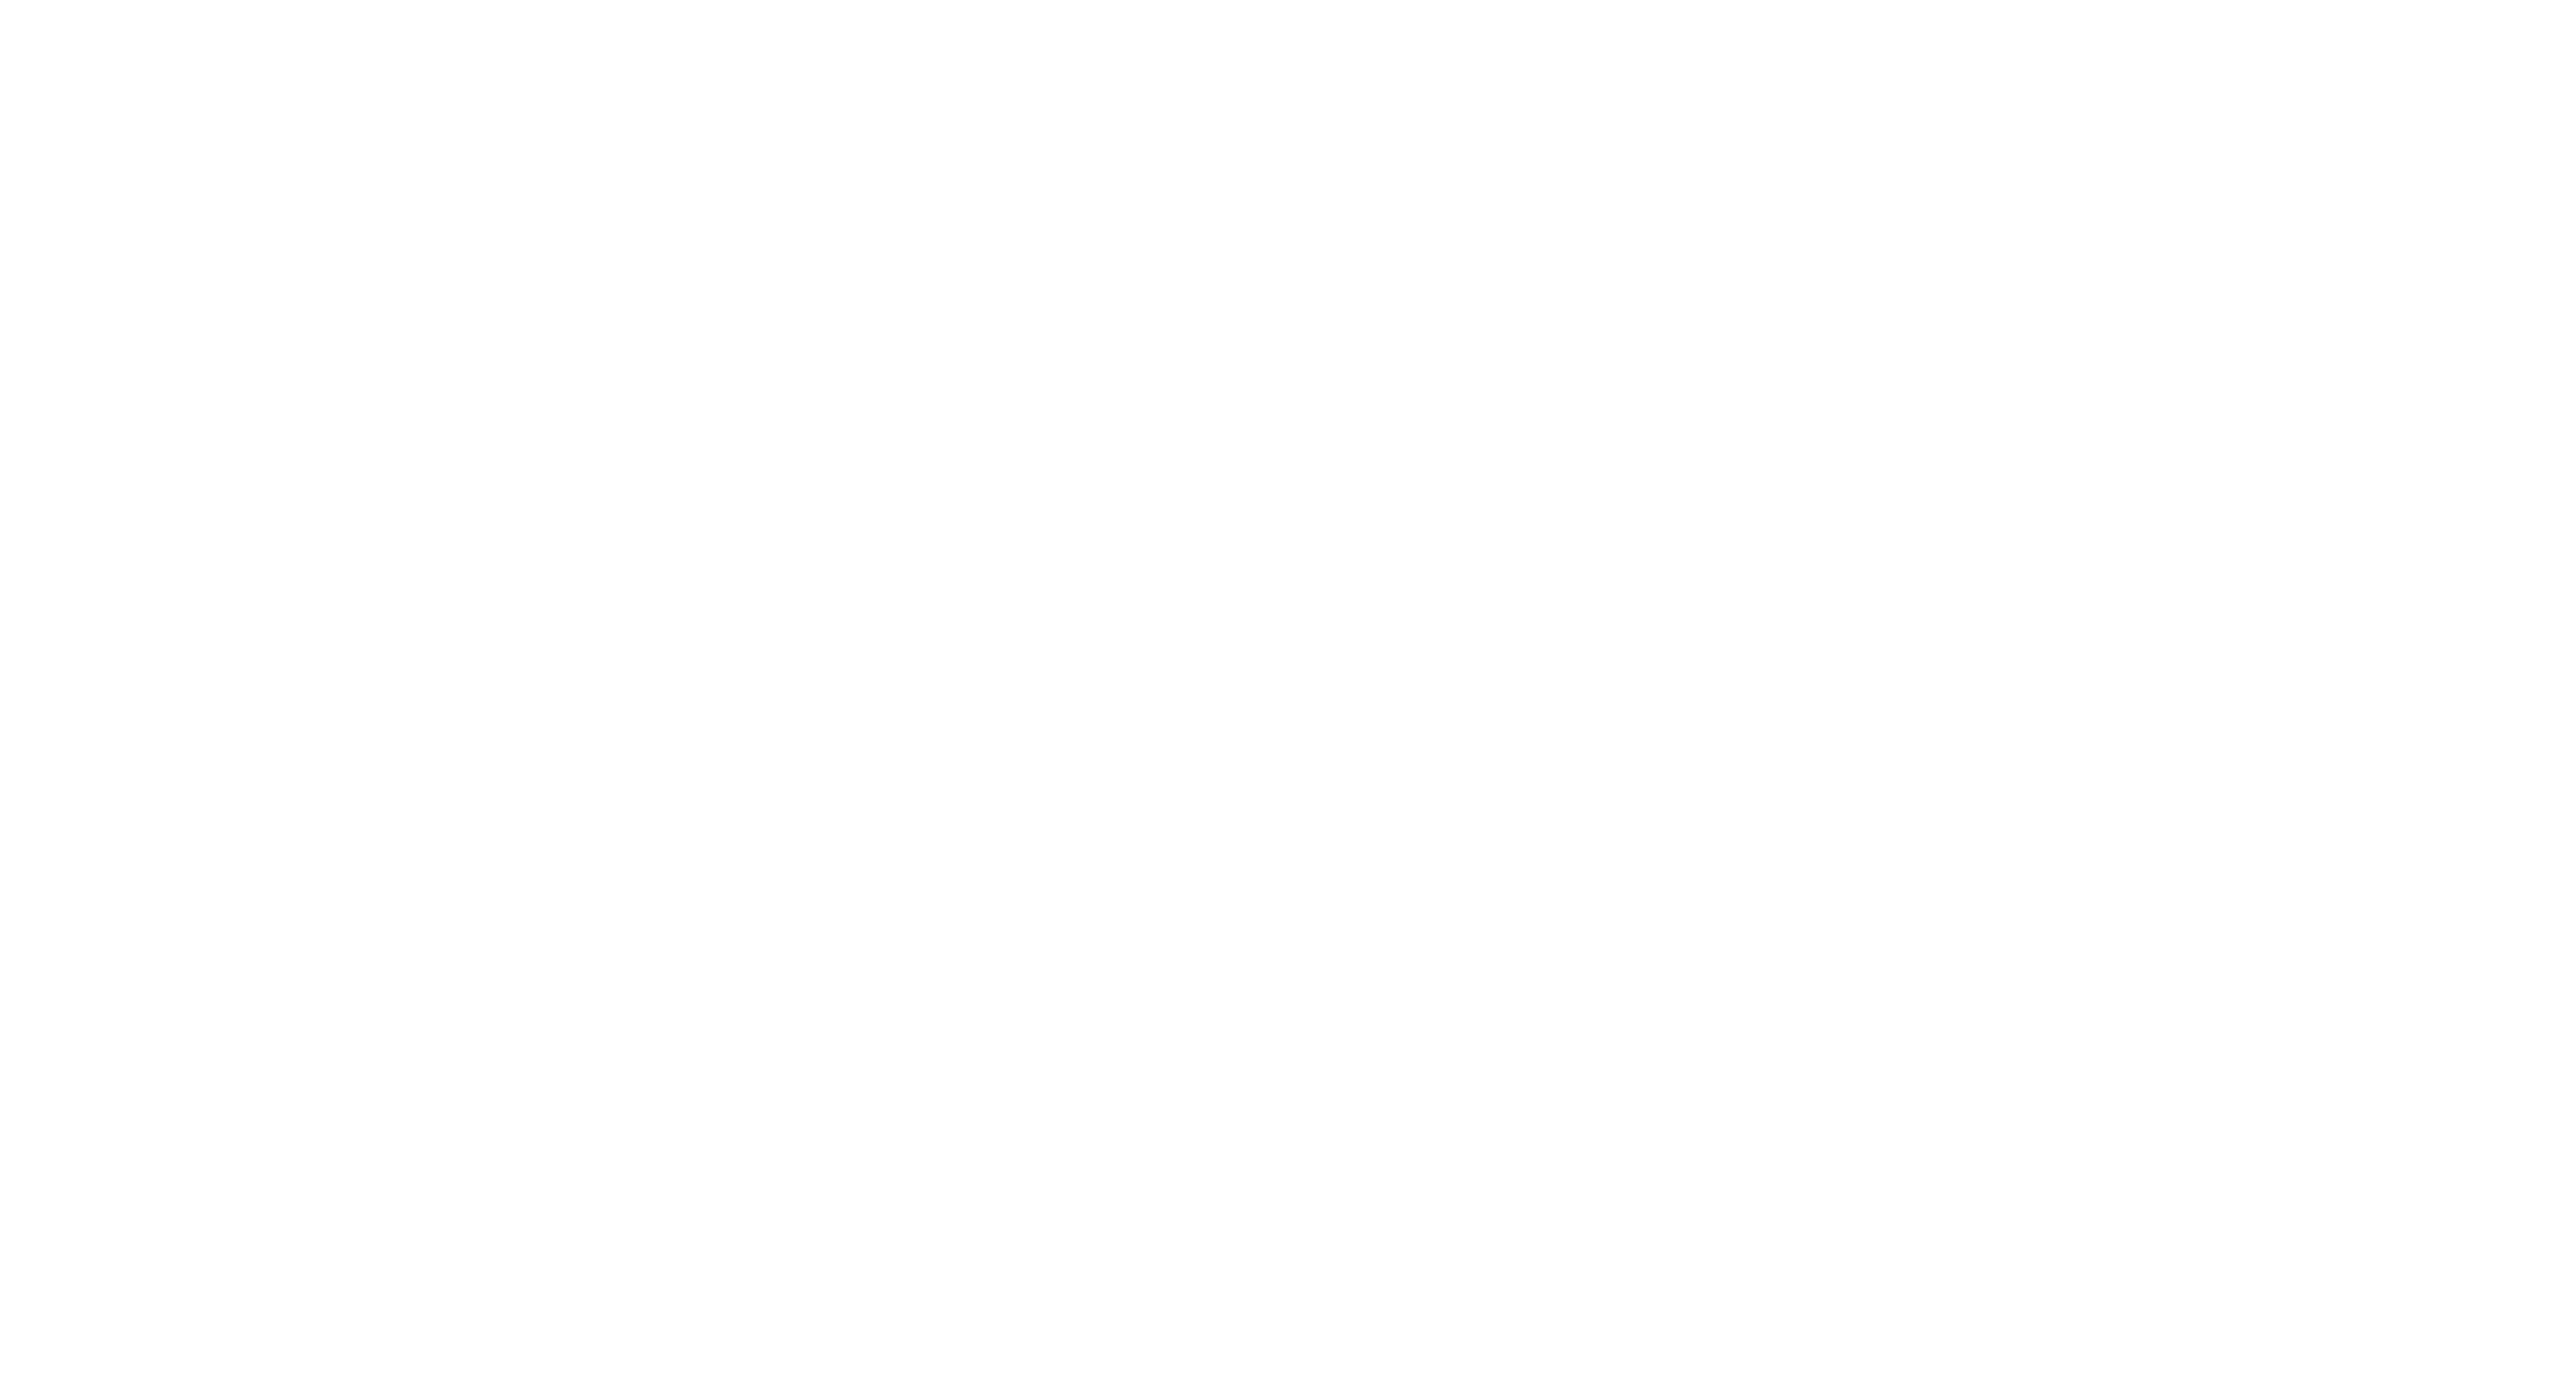 theatrelouisaragon